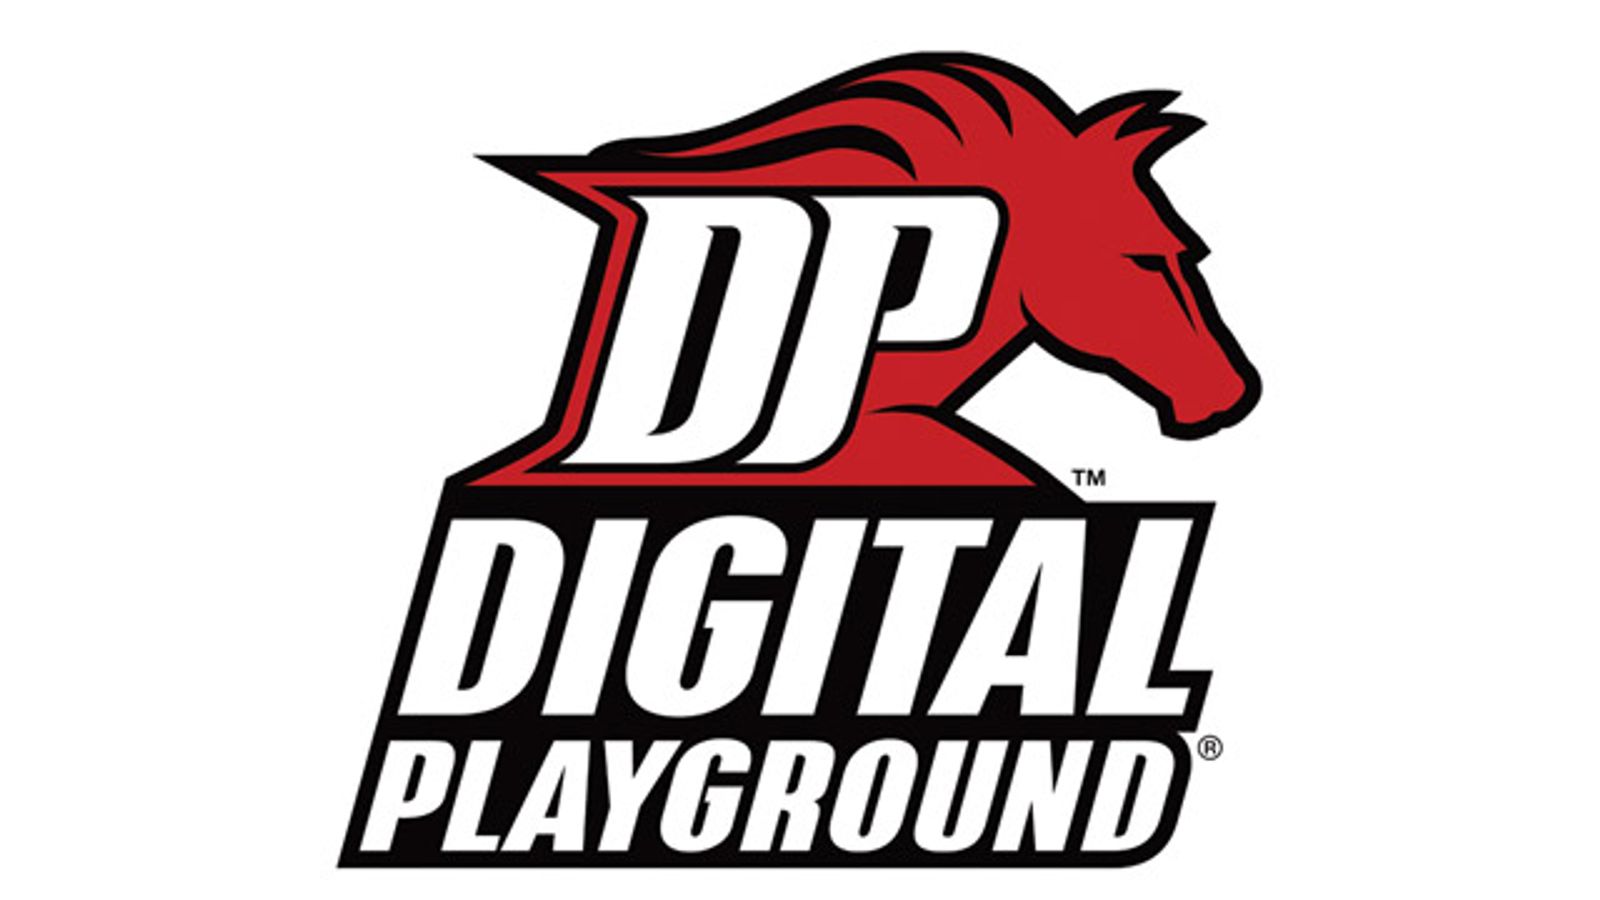 DigitalPlayground.com 2.0 Launches